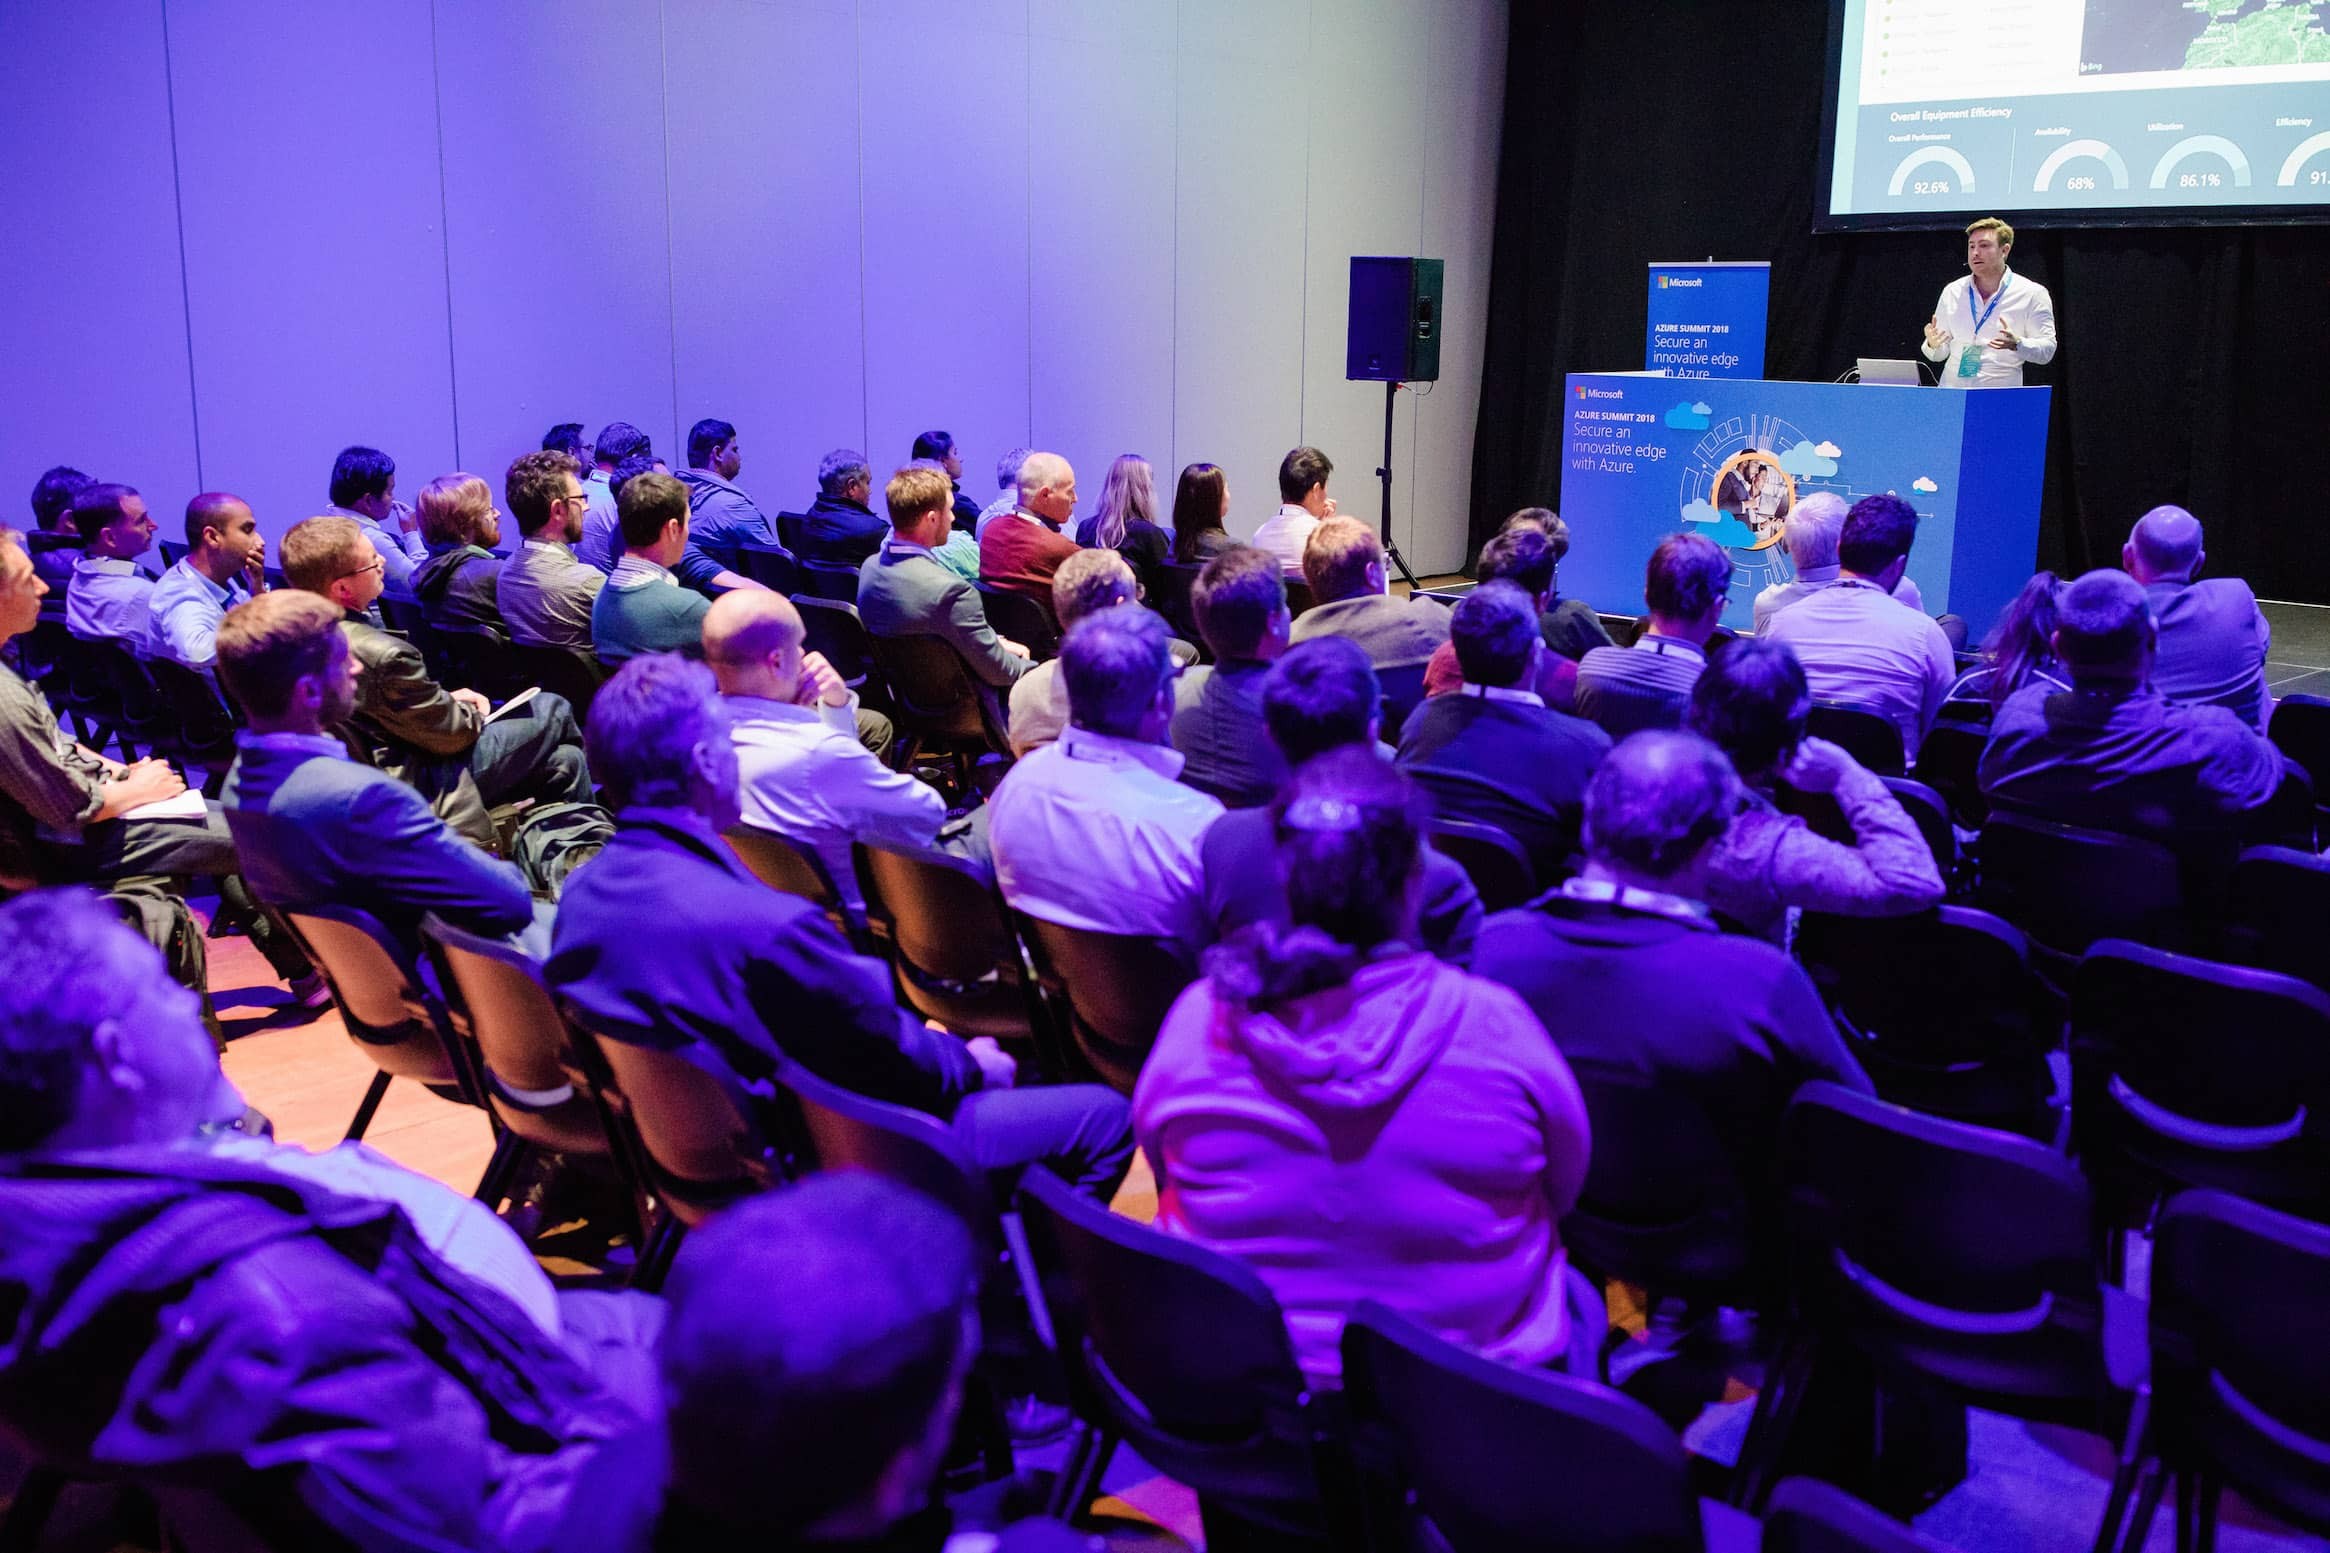 Microsoft Azure Summit Wellington, wellington, new zealand, microsoft, conference, tech conference